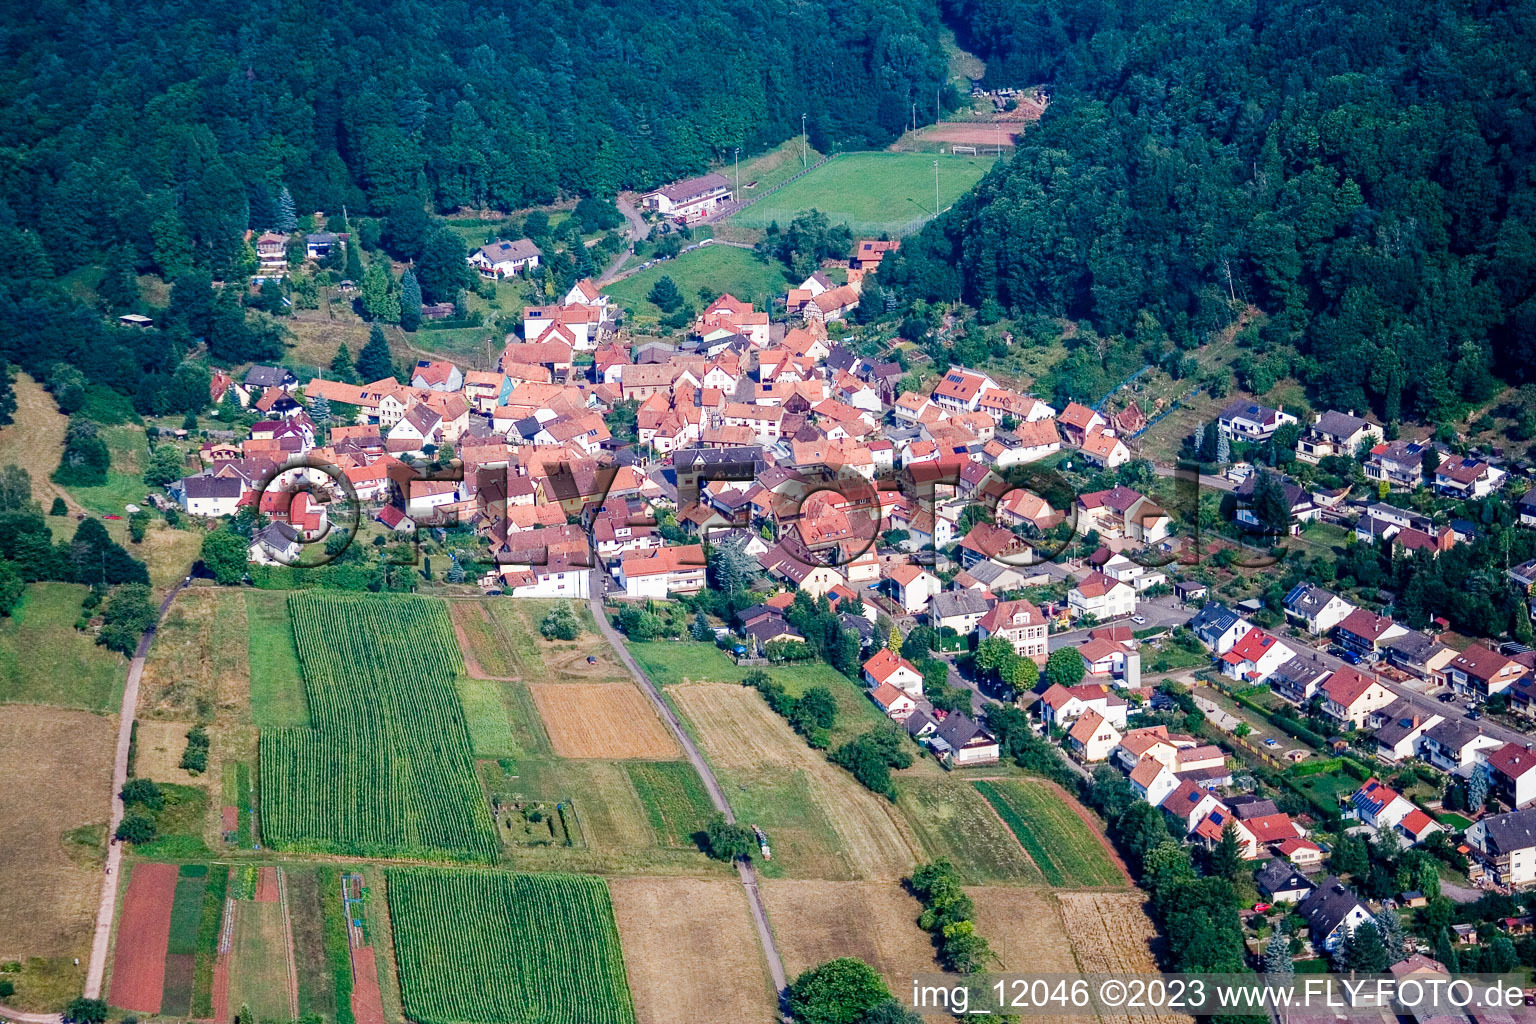 District Gräfenhausen in Annweiler am Trifels in the state Rhineland-Palatinate, Germany from the plane